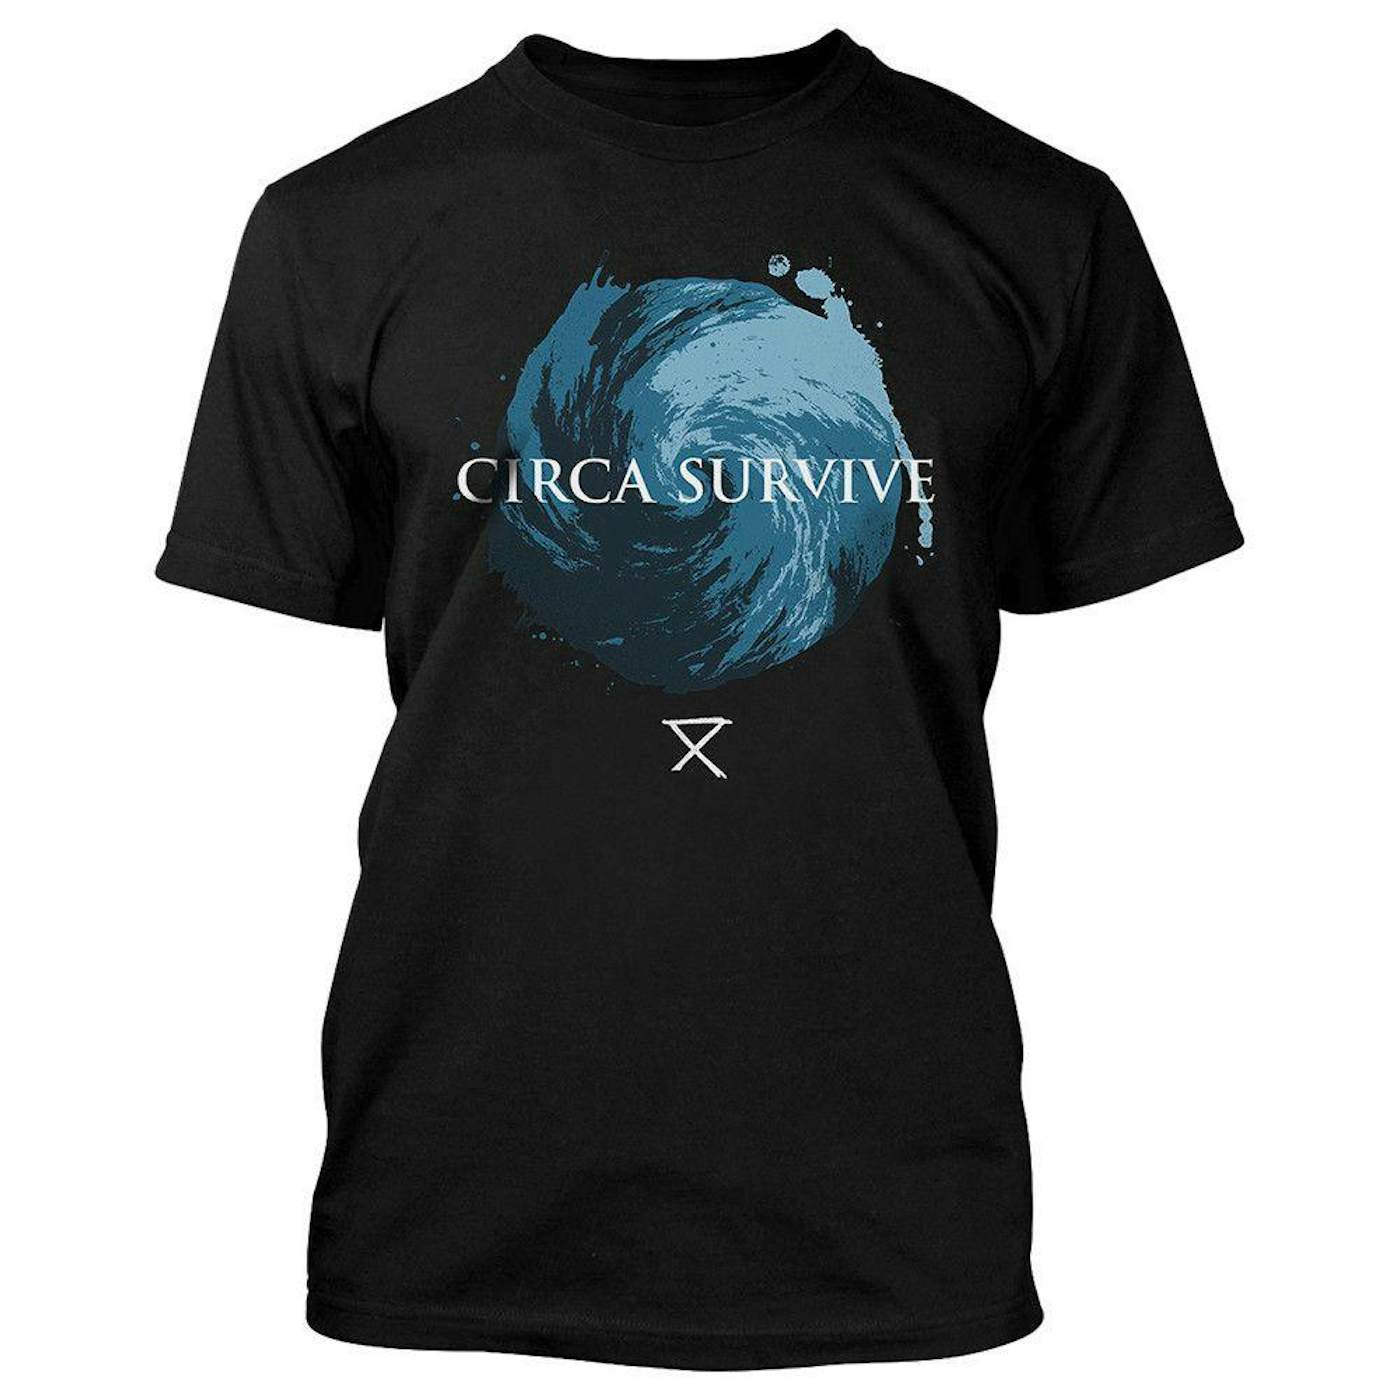 Circa Survive Eye of the Storm T-shirt